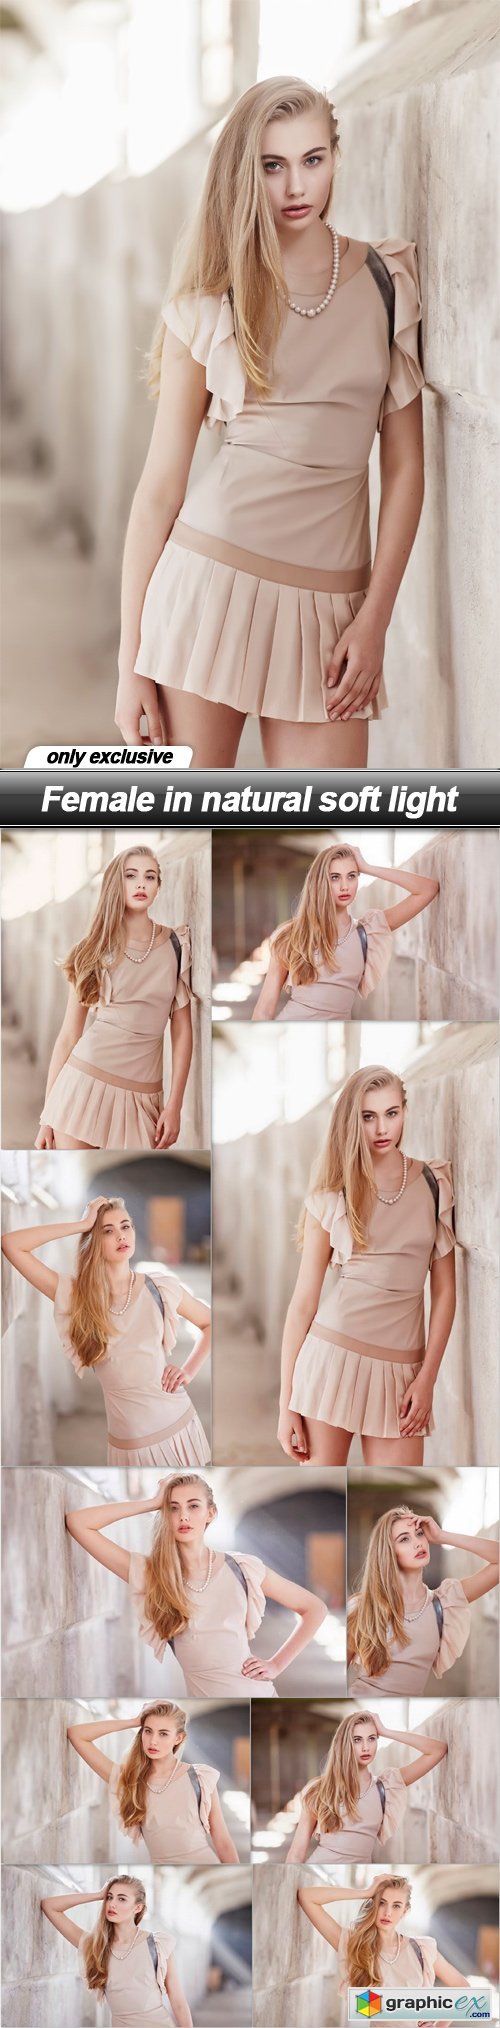 Female in natural soft light - 10 UHQ JPEG